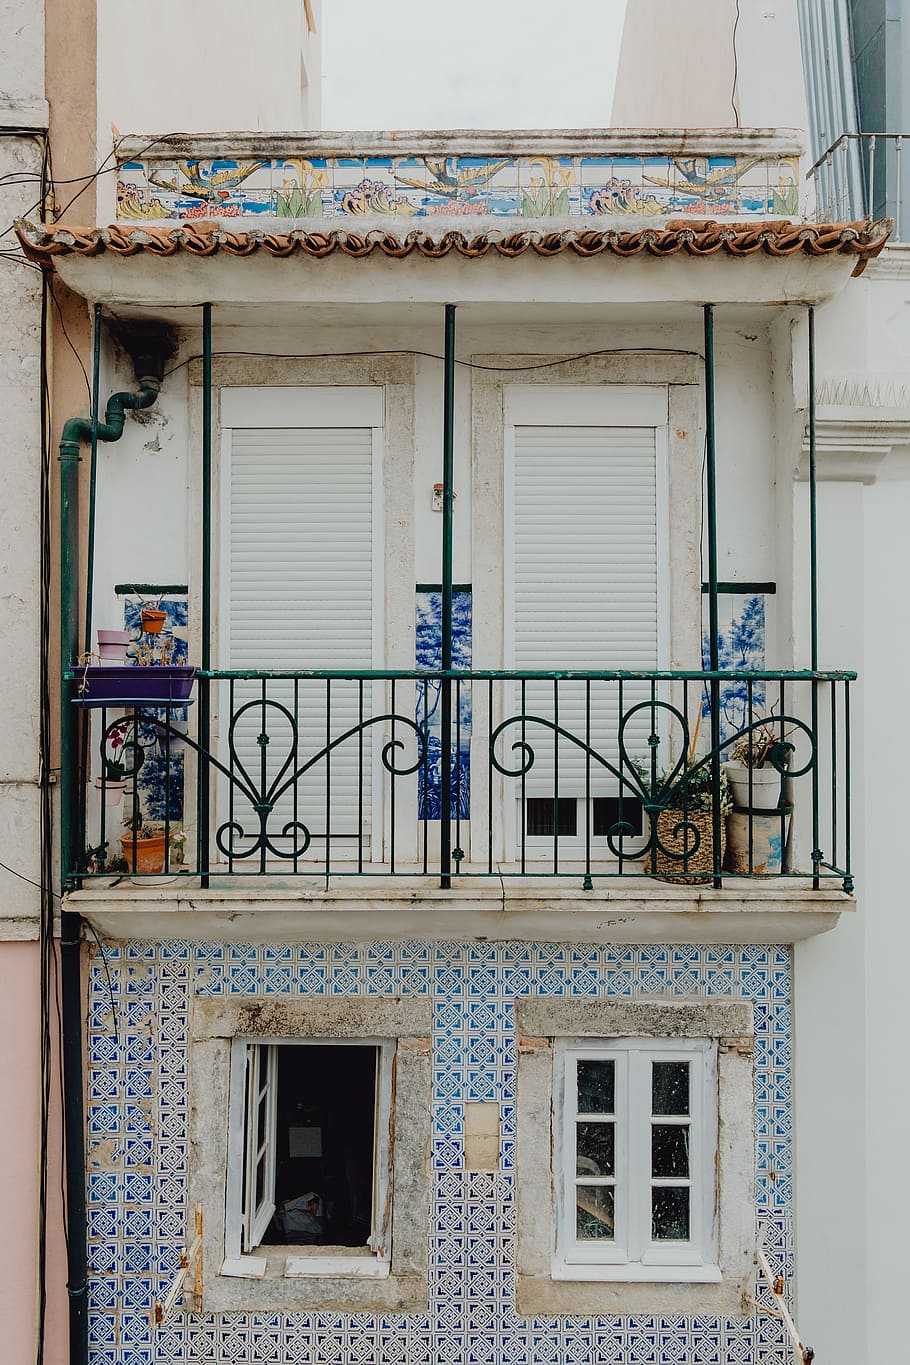 arquitectura de lisboa, portugal, arquitectura, edificios, ciudad, europa, fachada, colorido, lisboa, junio